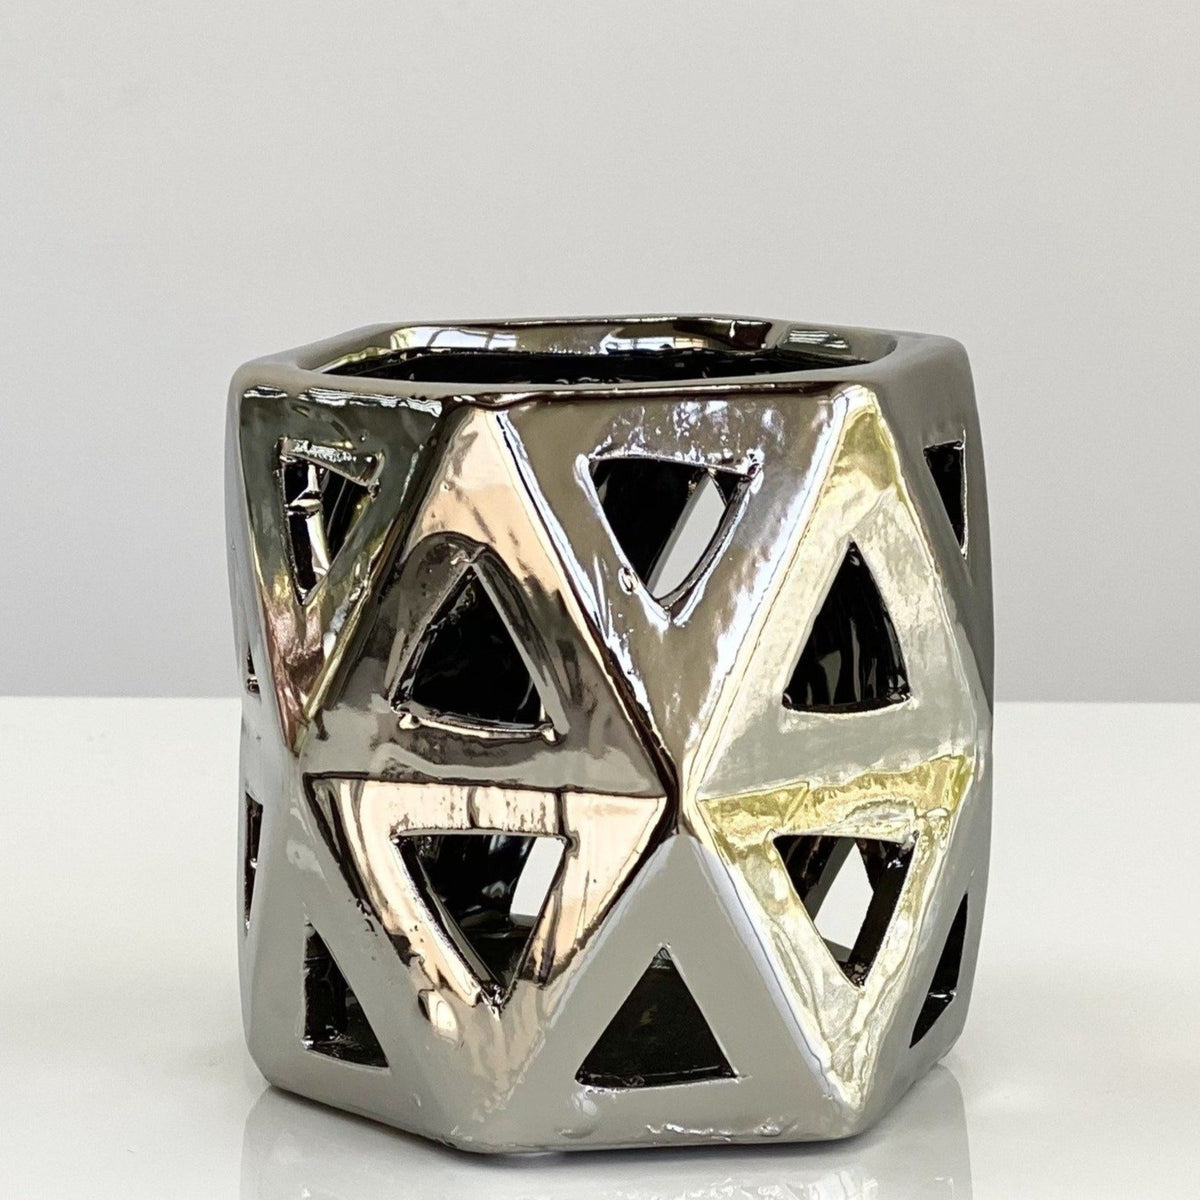 Geometric Design Ceramic Silver Vase